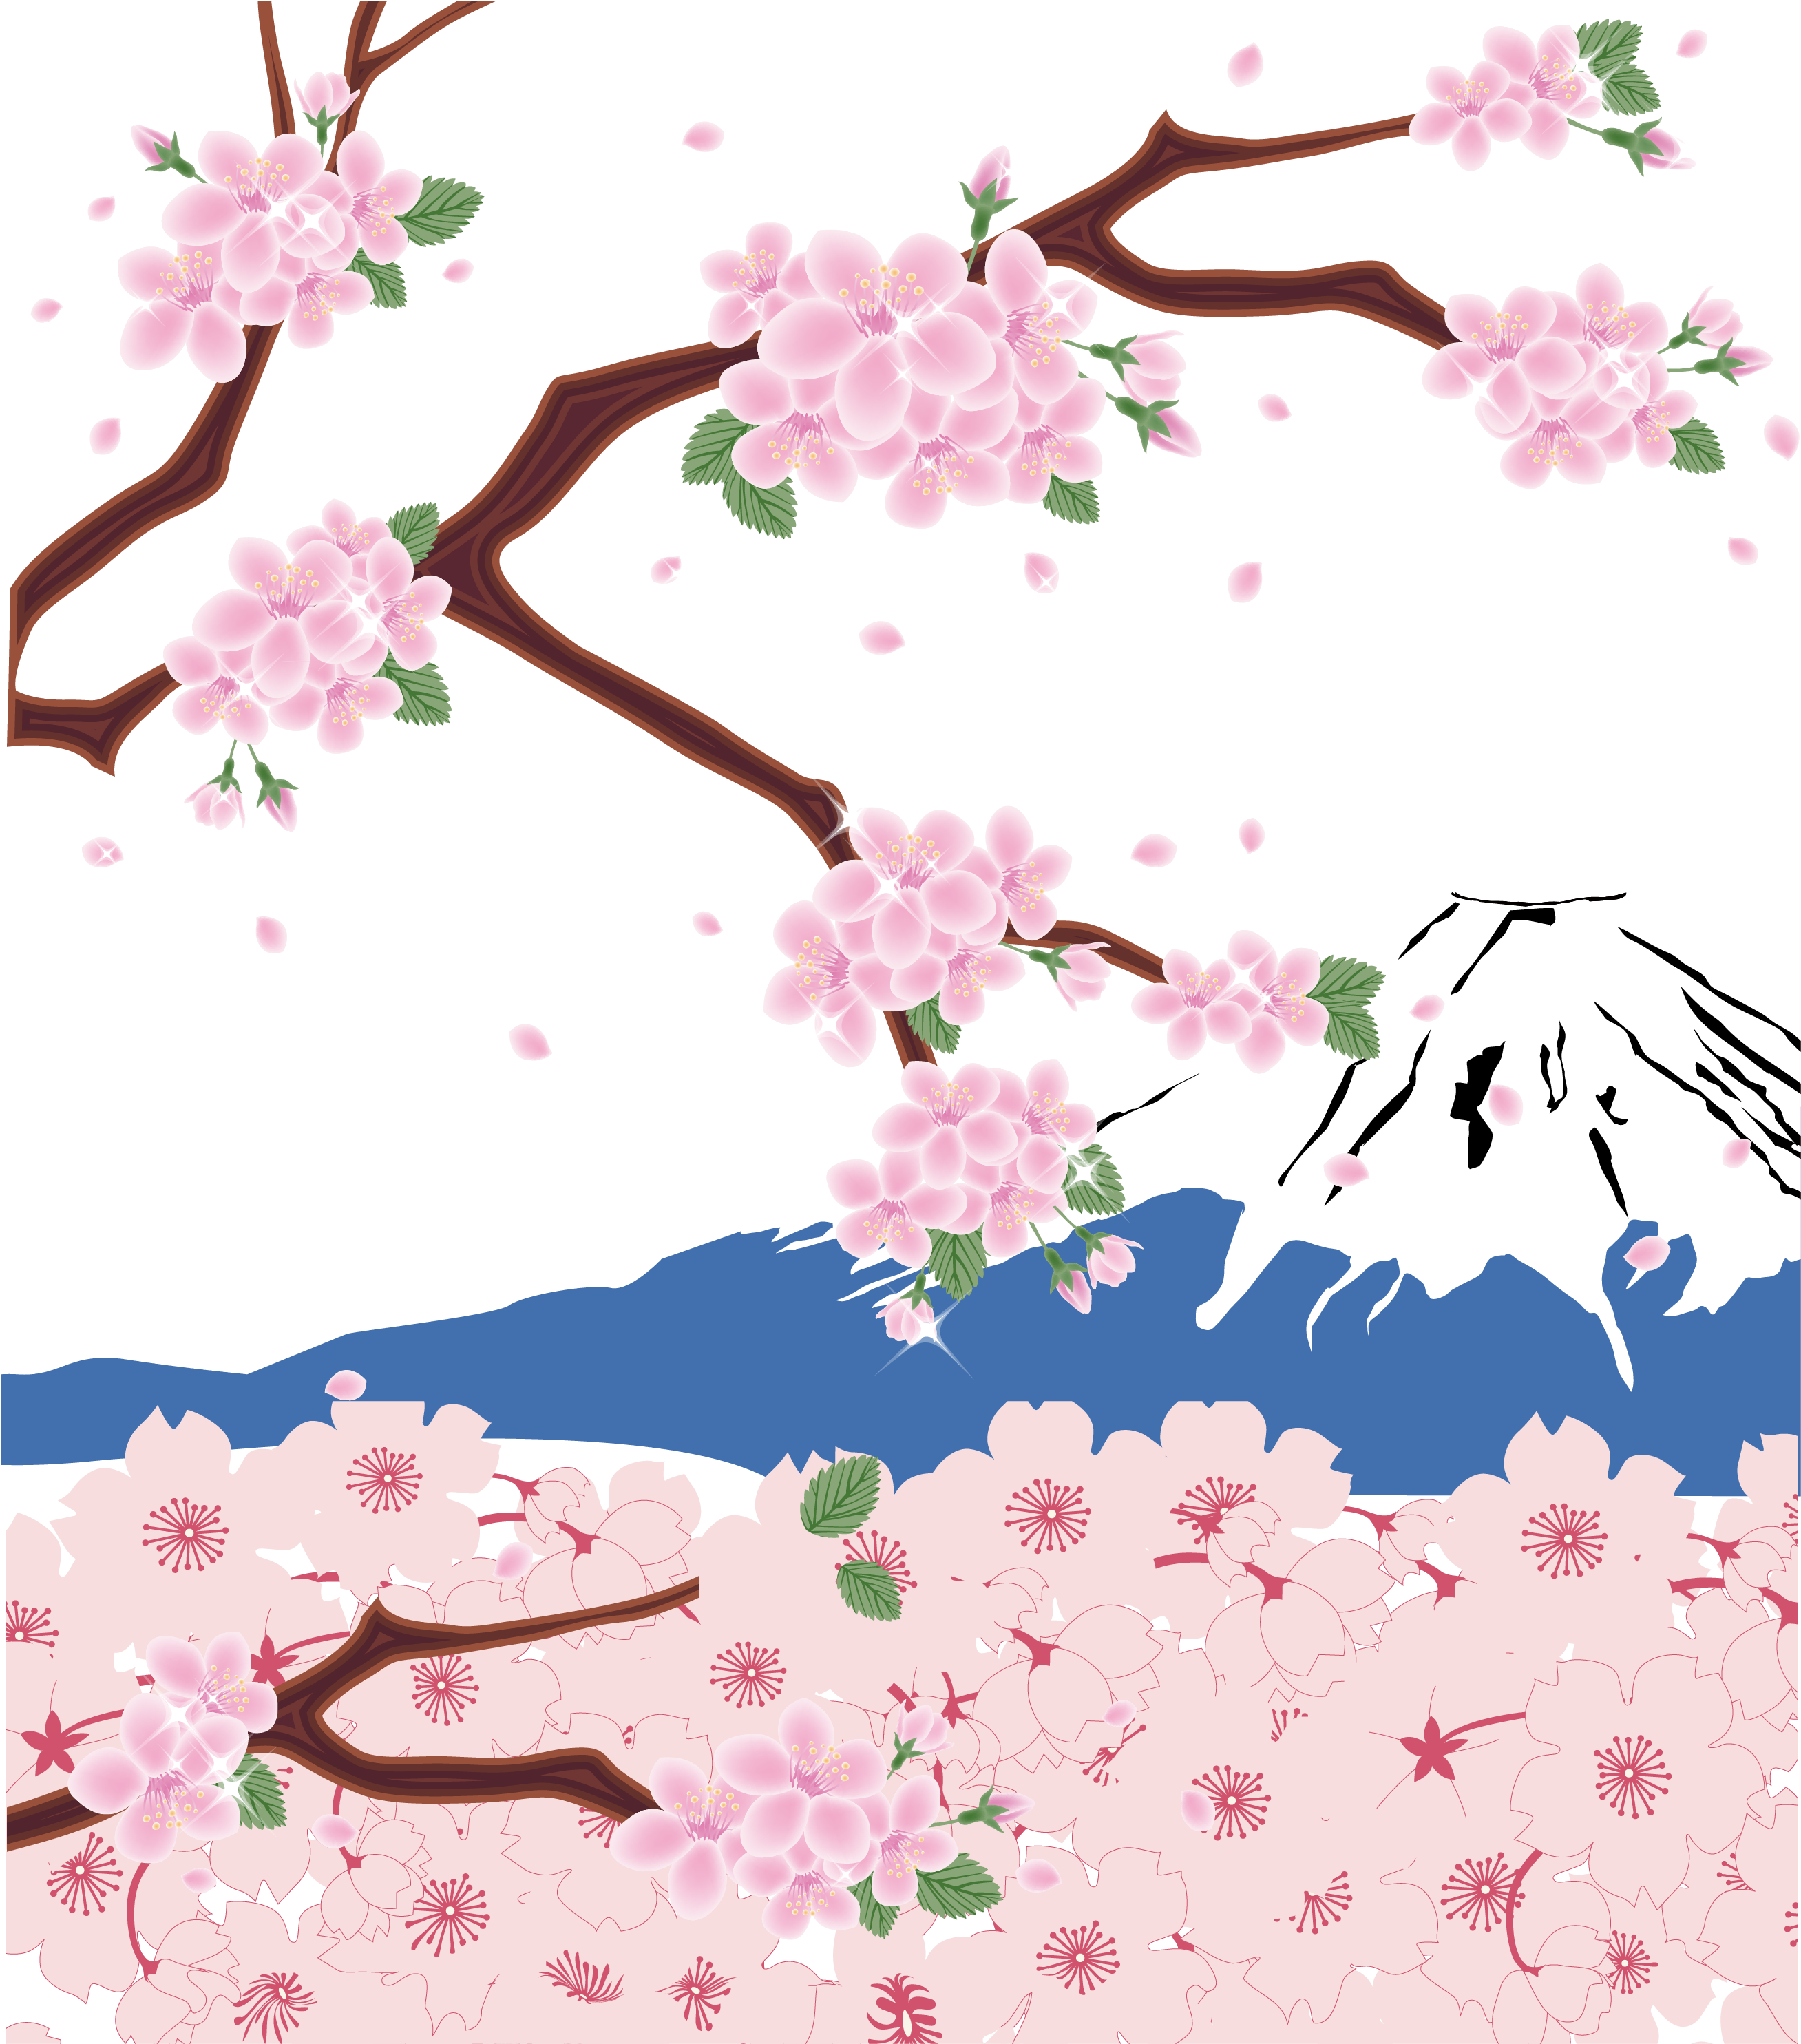 176-1762649_mount-fuji-cherry-blossom-download-mount-fuji.png